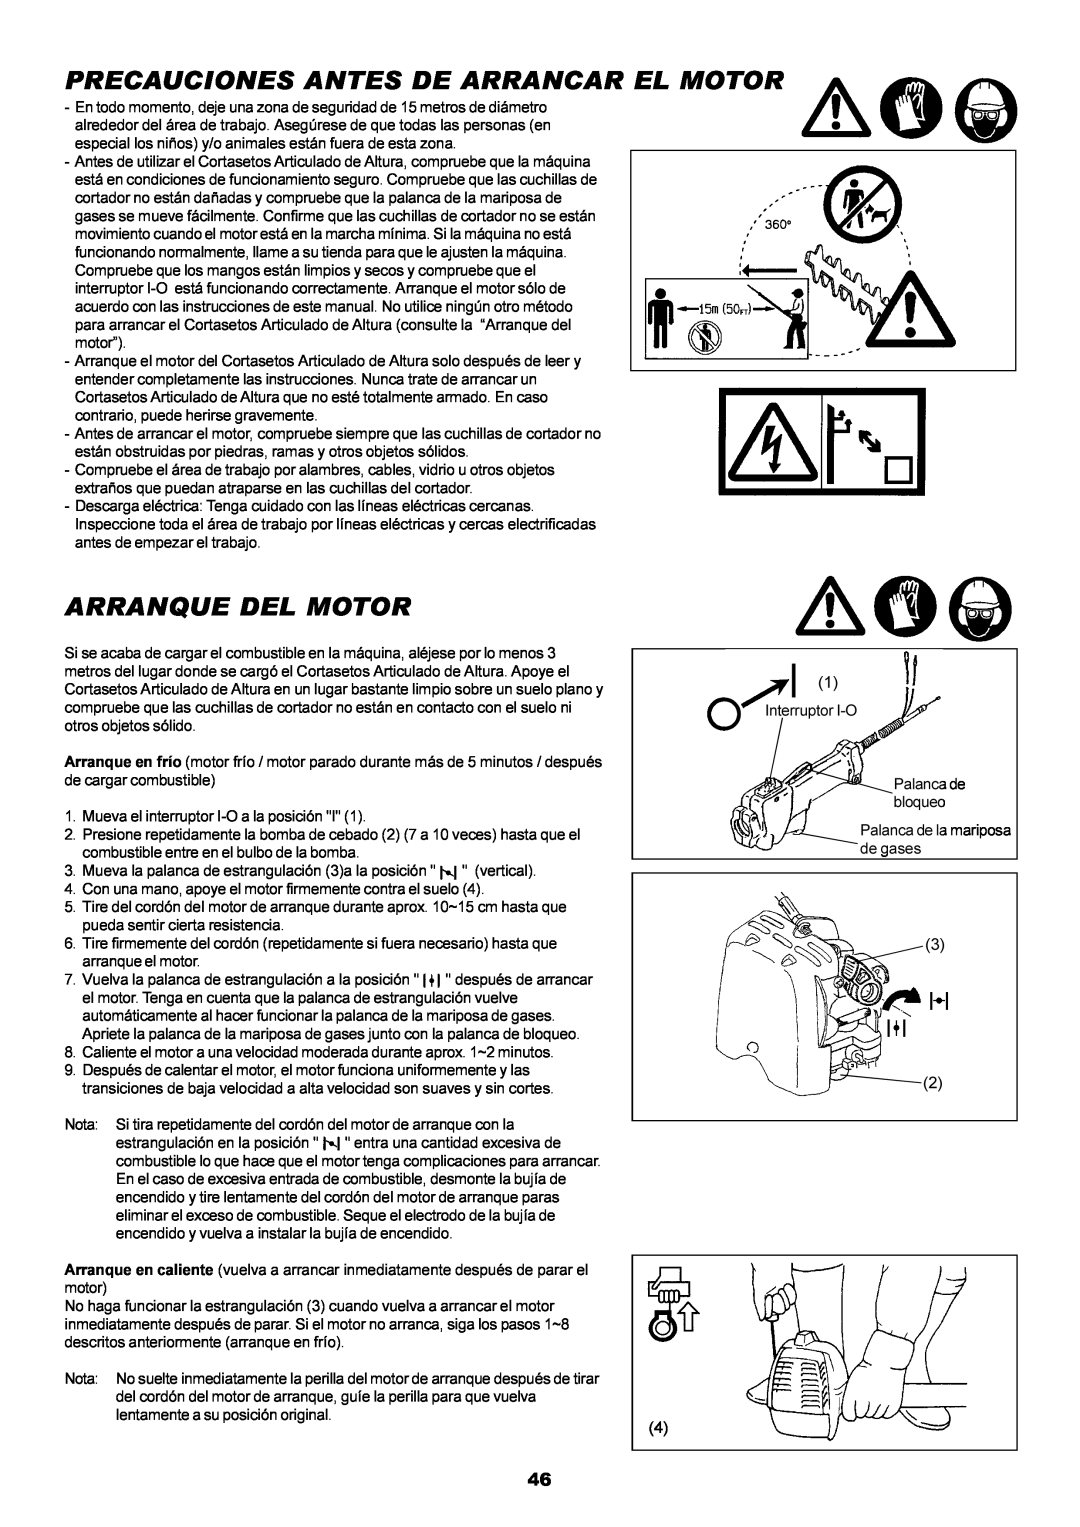 Dolmar MH-2556 instruction manual Precauciones Antes De Arrancar El Motor, Arranque Del Motor 